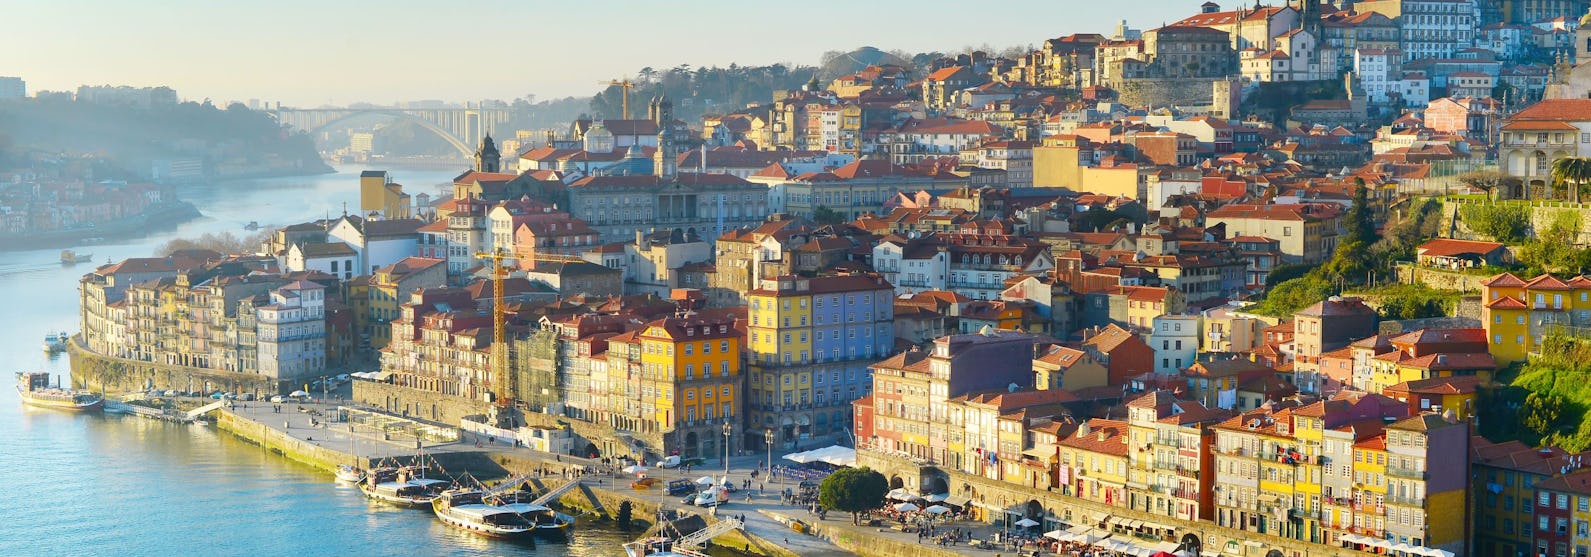 Porto-Leixoes-Portugal-Mediterranean